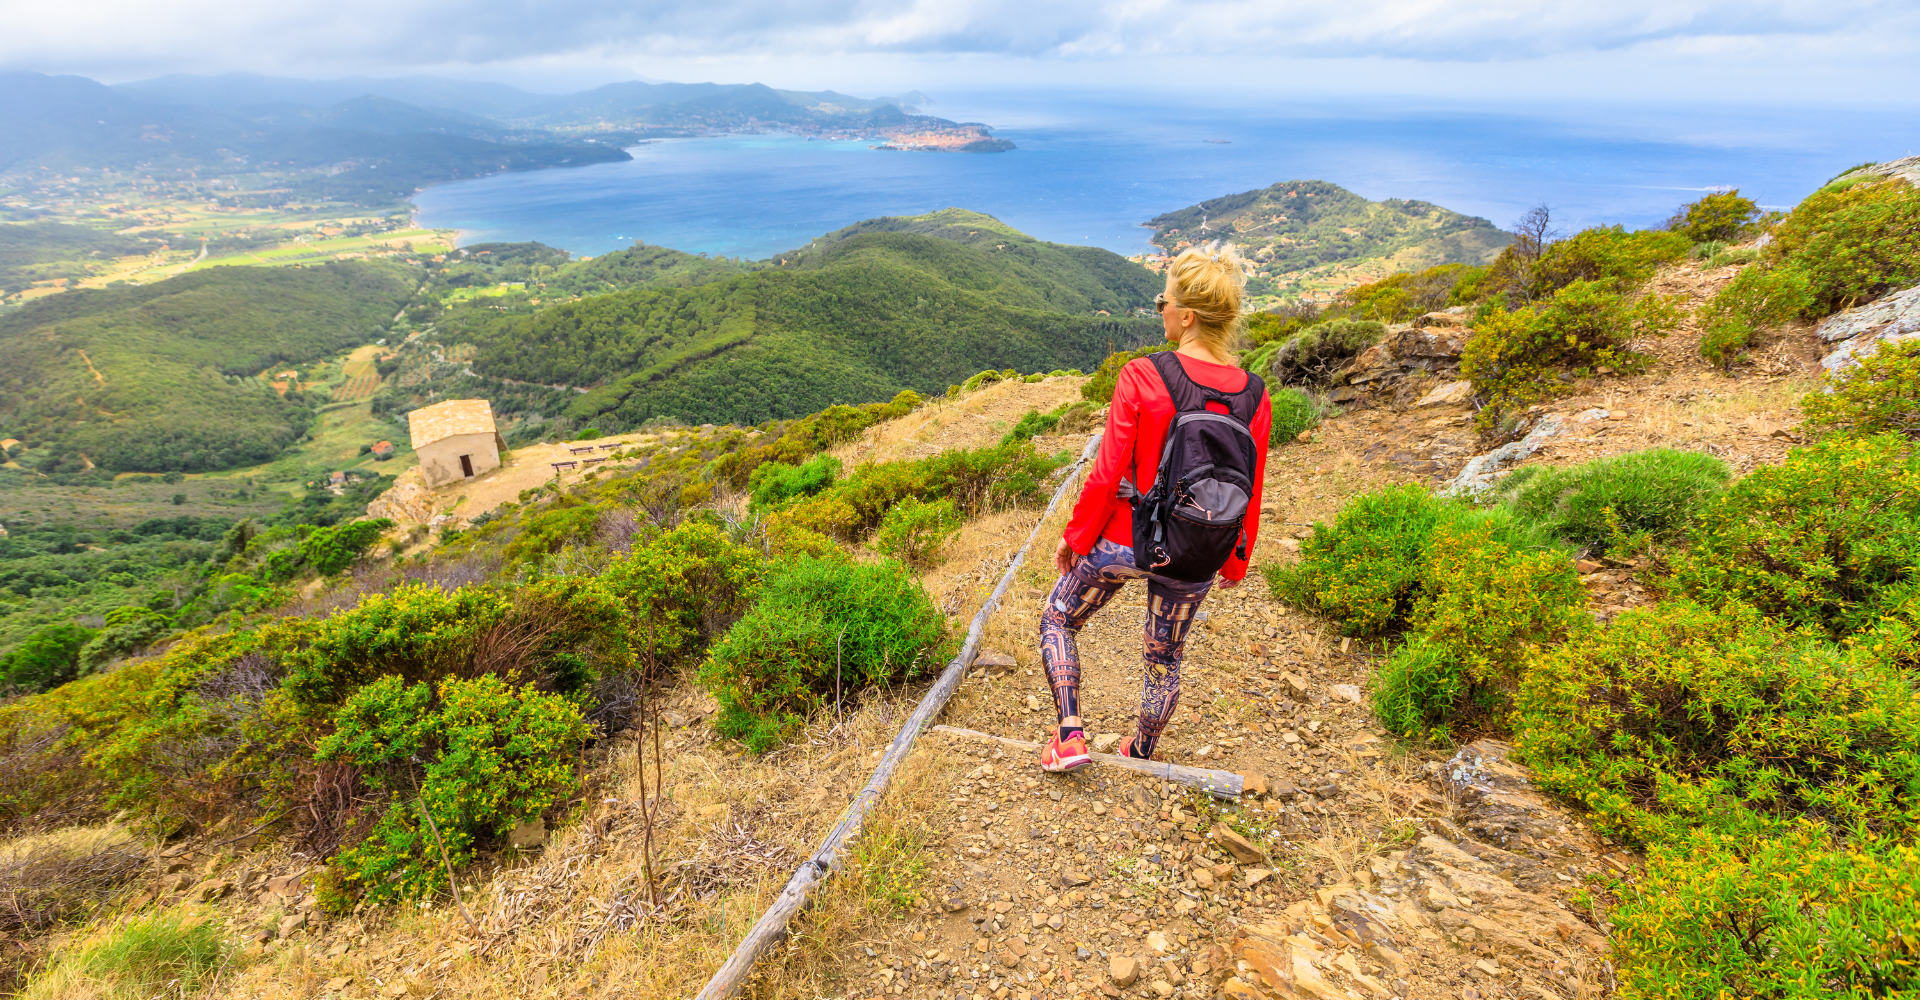 Elba island coasts to summits, guided trekking